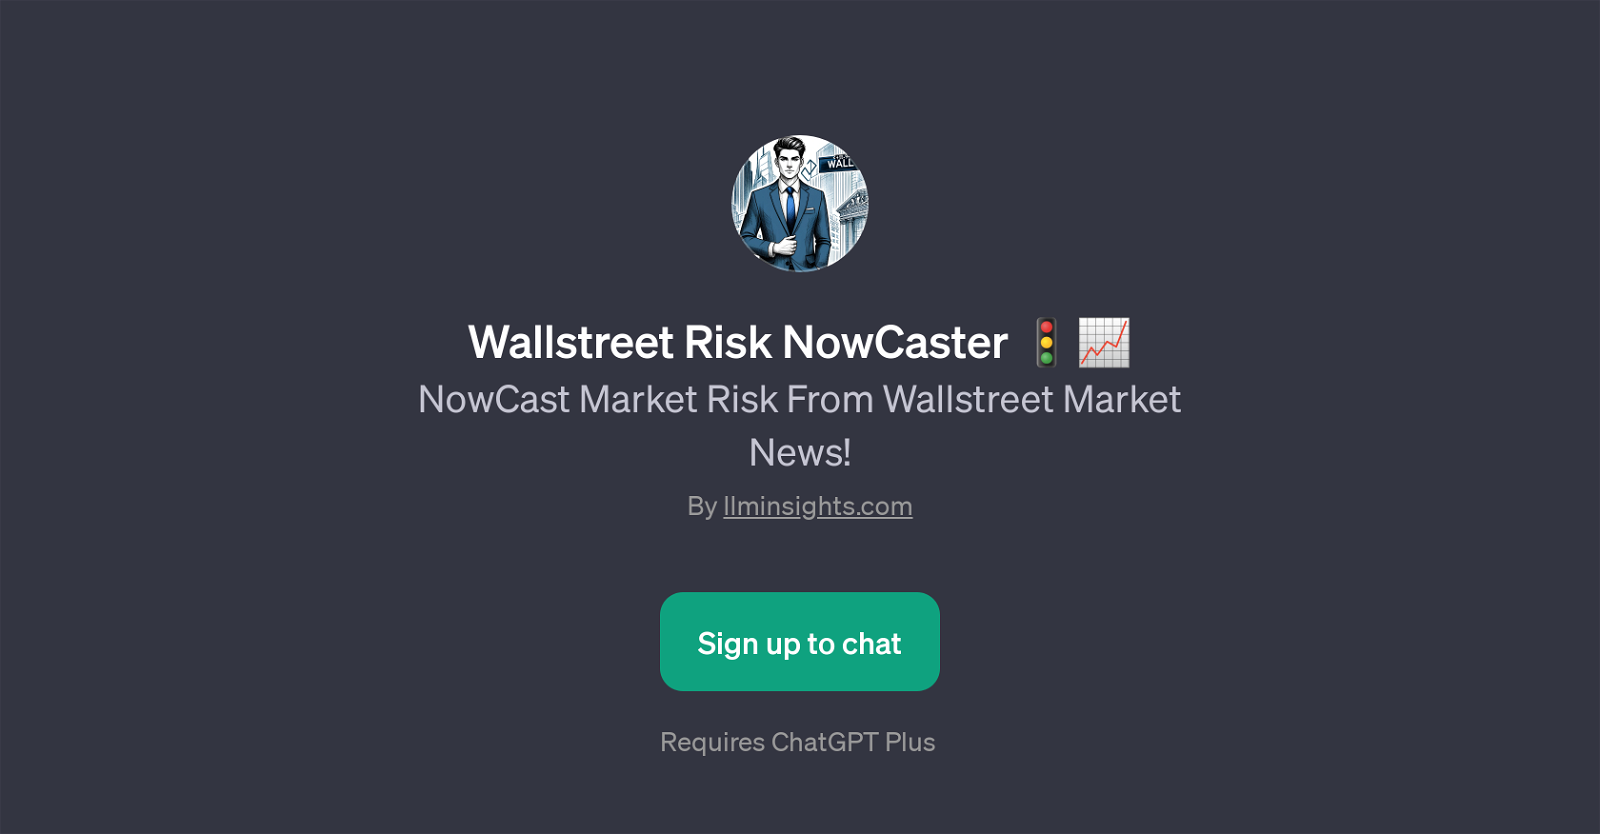 Wallstreet Risk NowCaster website